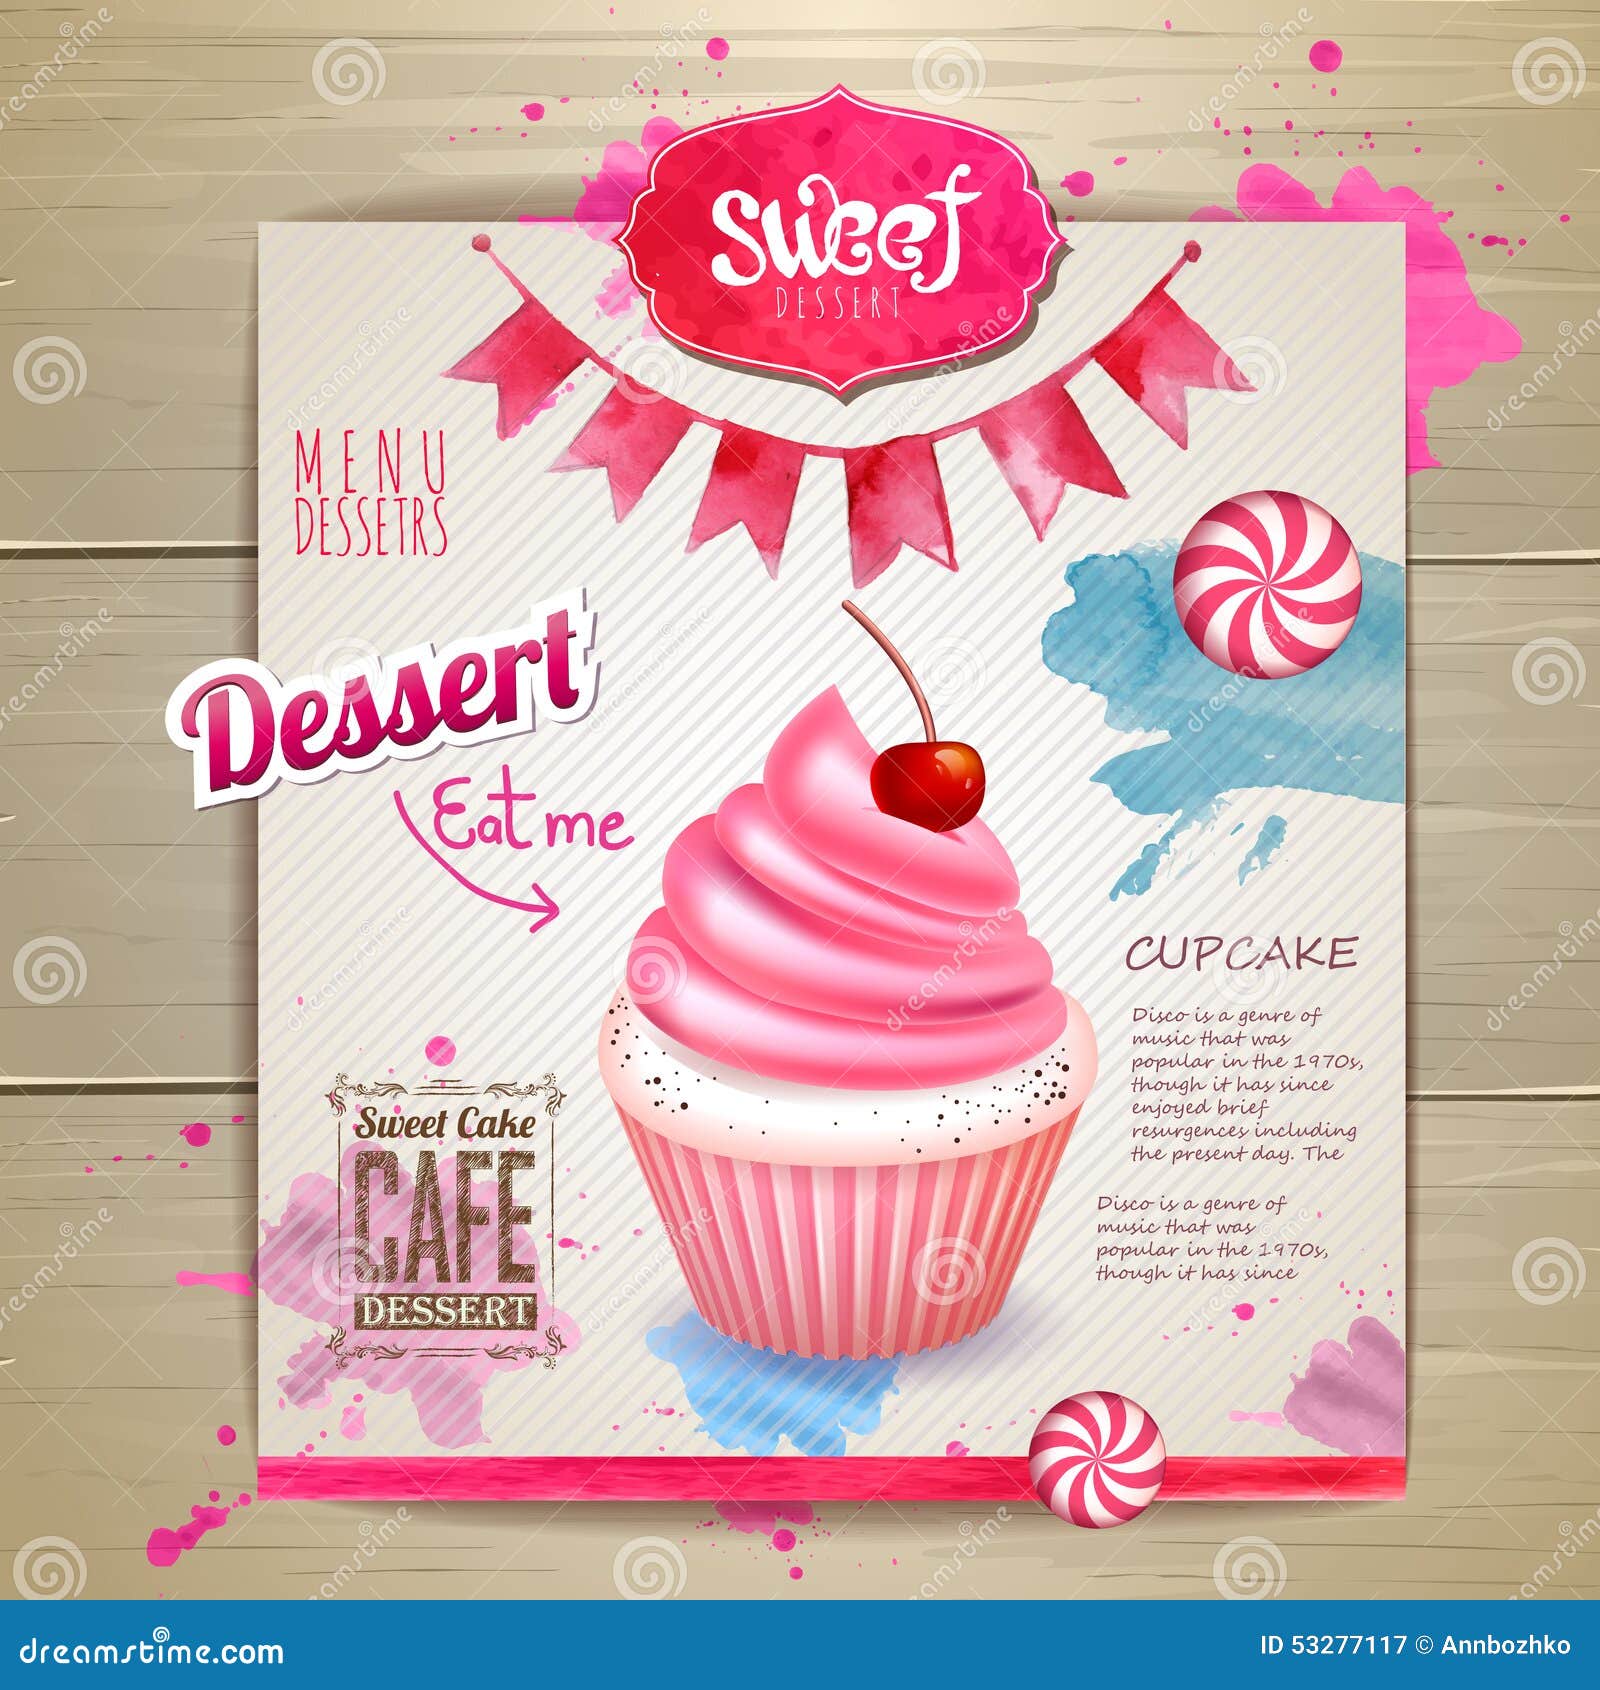 Get Background Advertising Cake Poster Design Pics